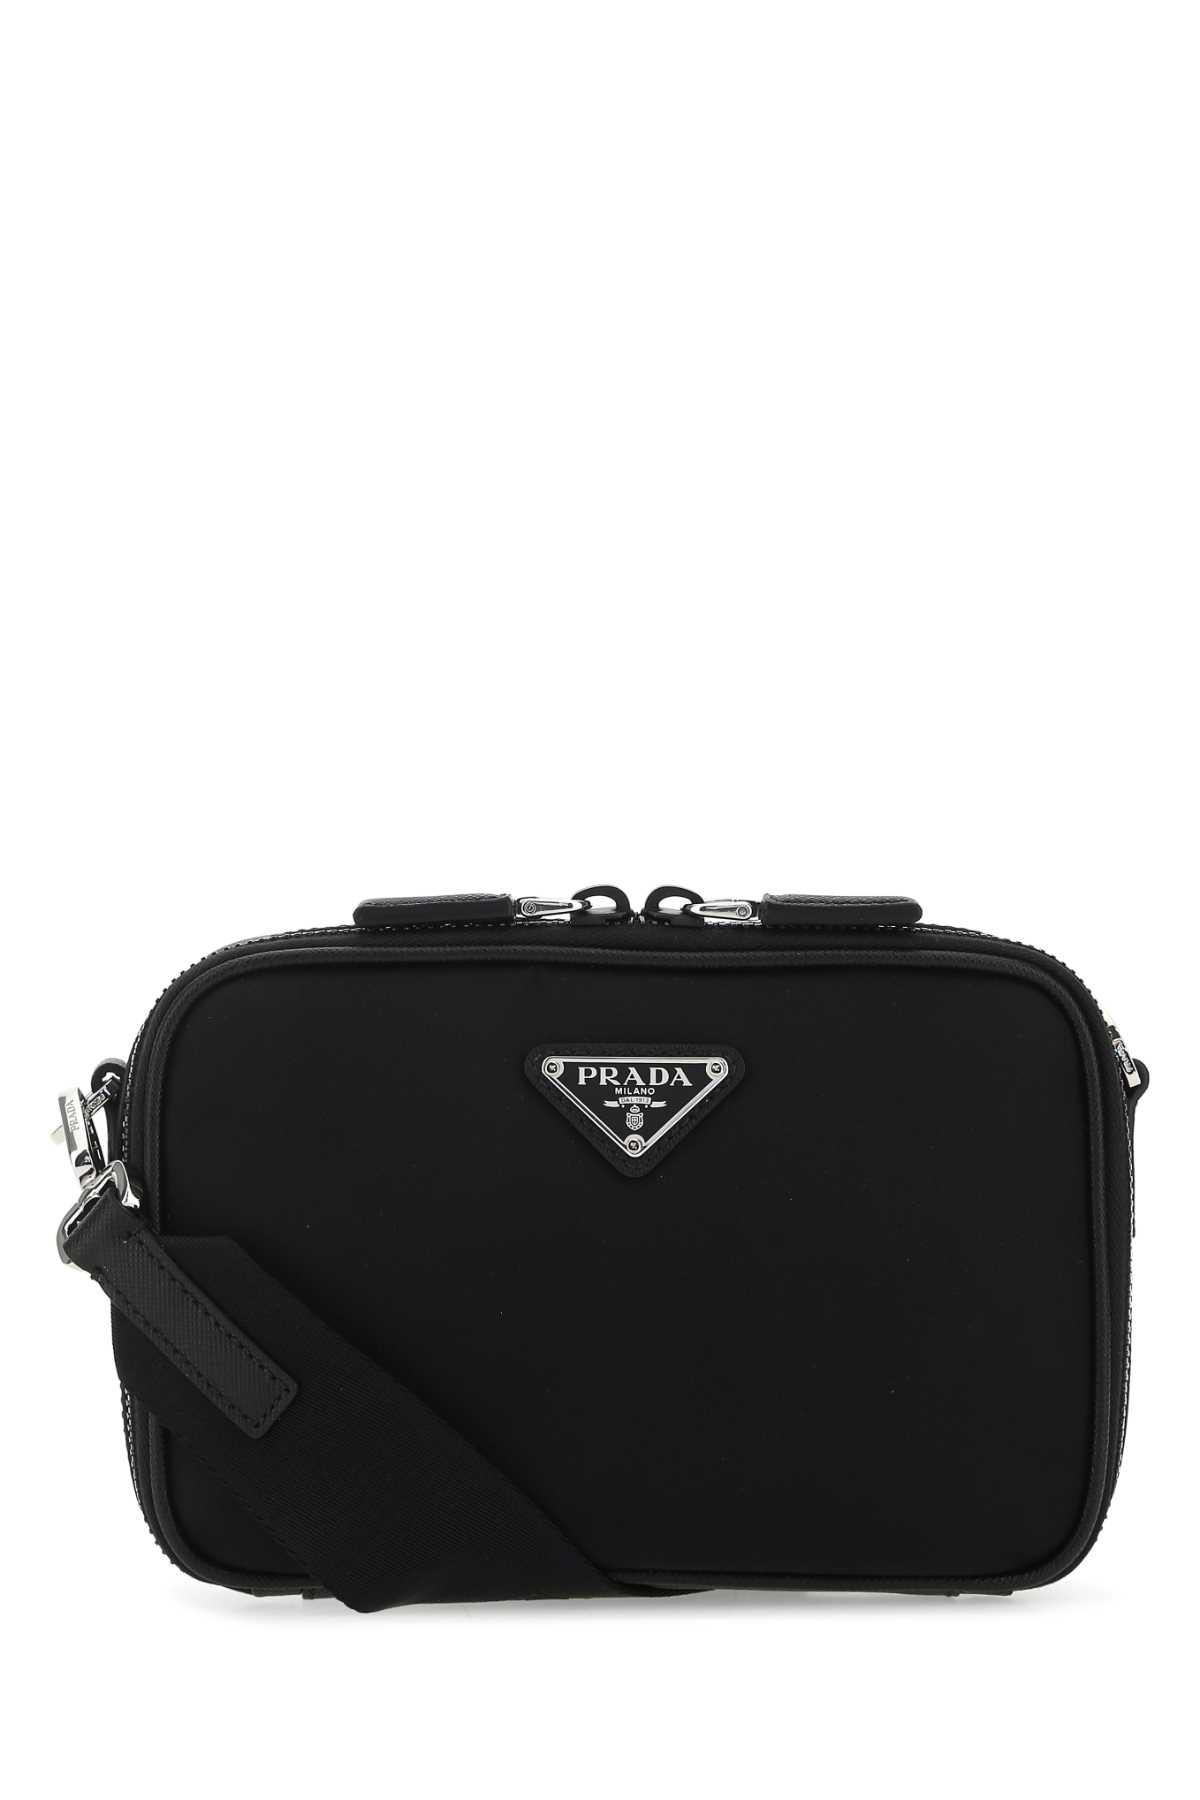 Prada Black Leather And Nylon Crossbody Bag